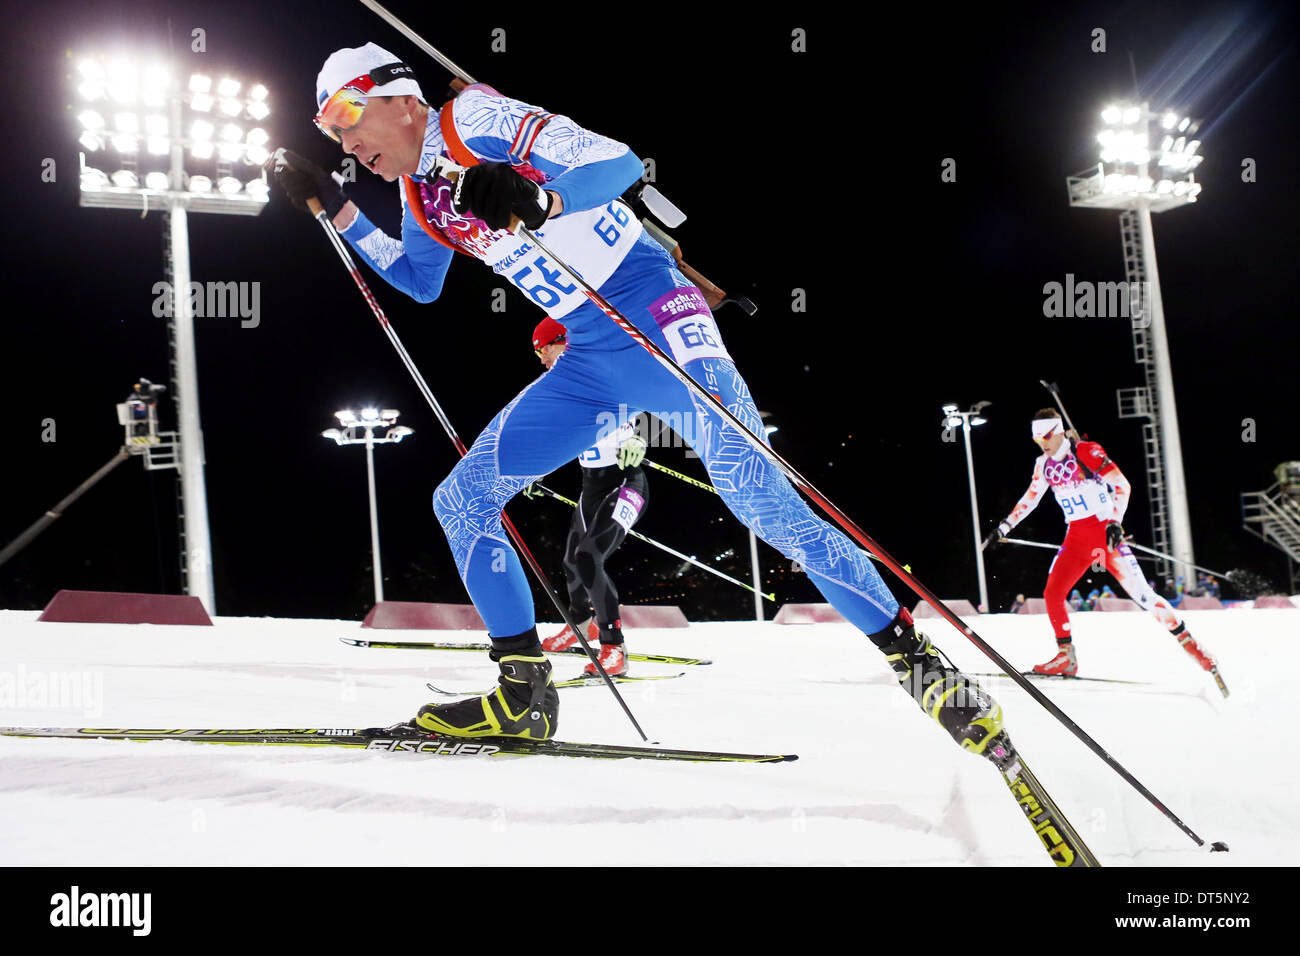 The XXII Winter Olympic Games 2014 in Sotchi, Olympics, Olympische Winterspiele Sotschi 2014 Indrek TOBRELUTS (EST) Stock Photo